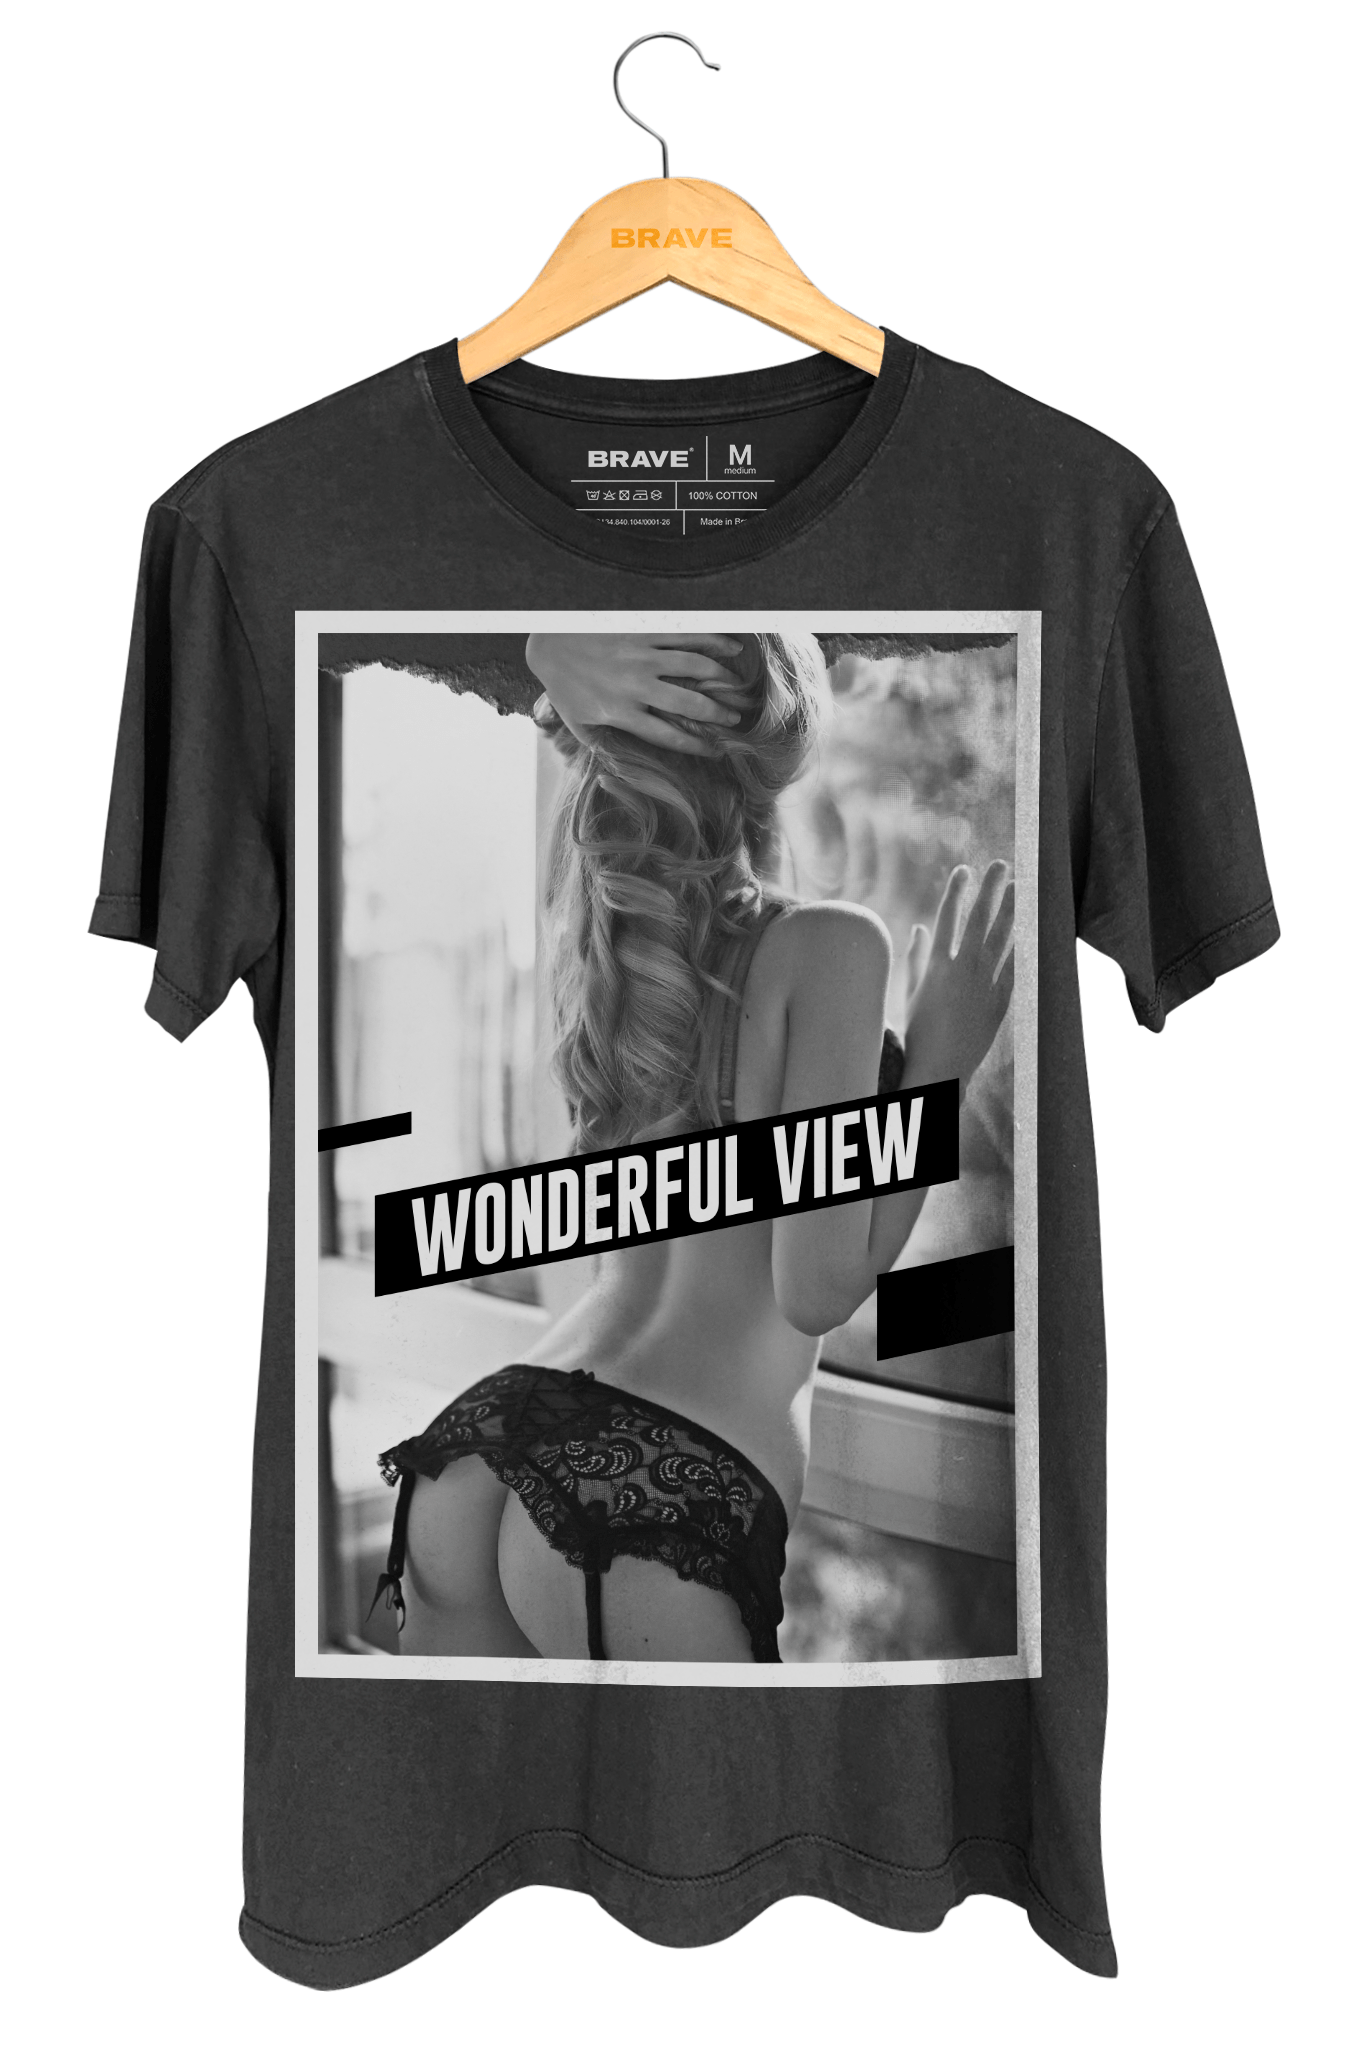 Camiseta Wonderful View Black - Gola Básica